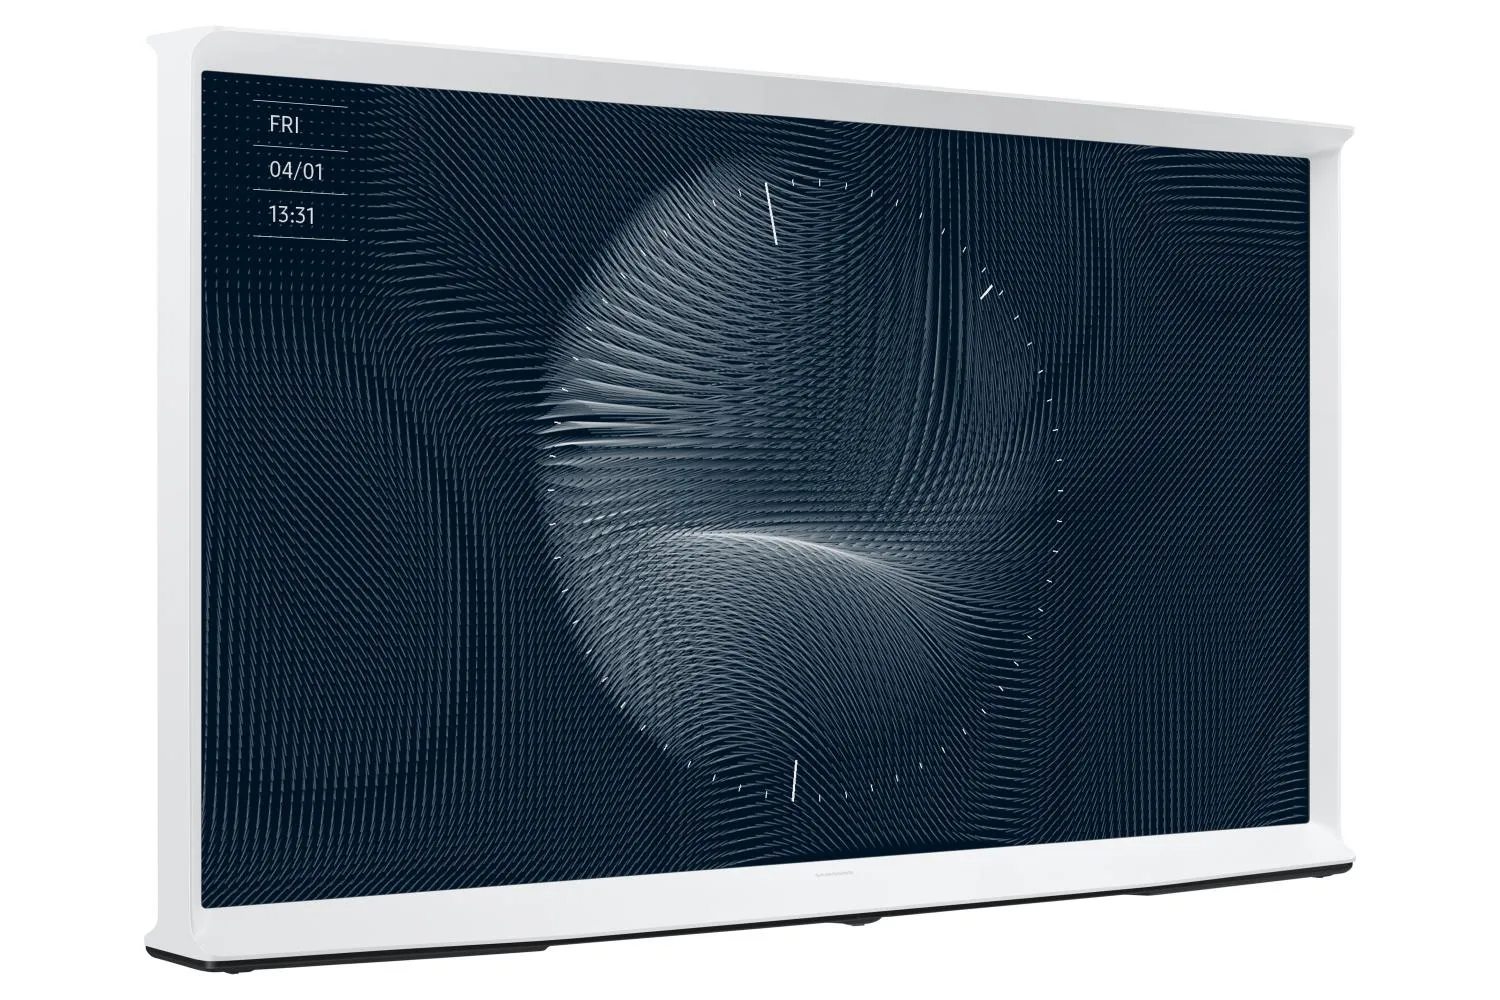 Samsung The Serif Smart Tv 43 Pollici 4k Ultra Hd Display Qled Aniriflesso Con Design Iconico 0752